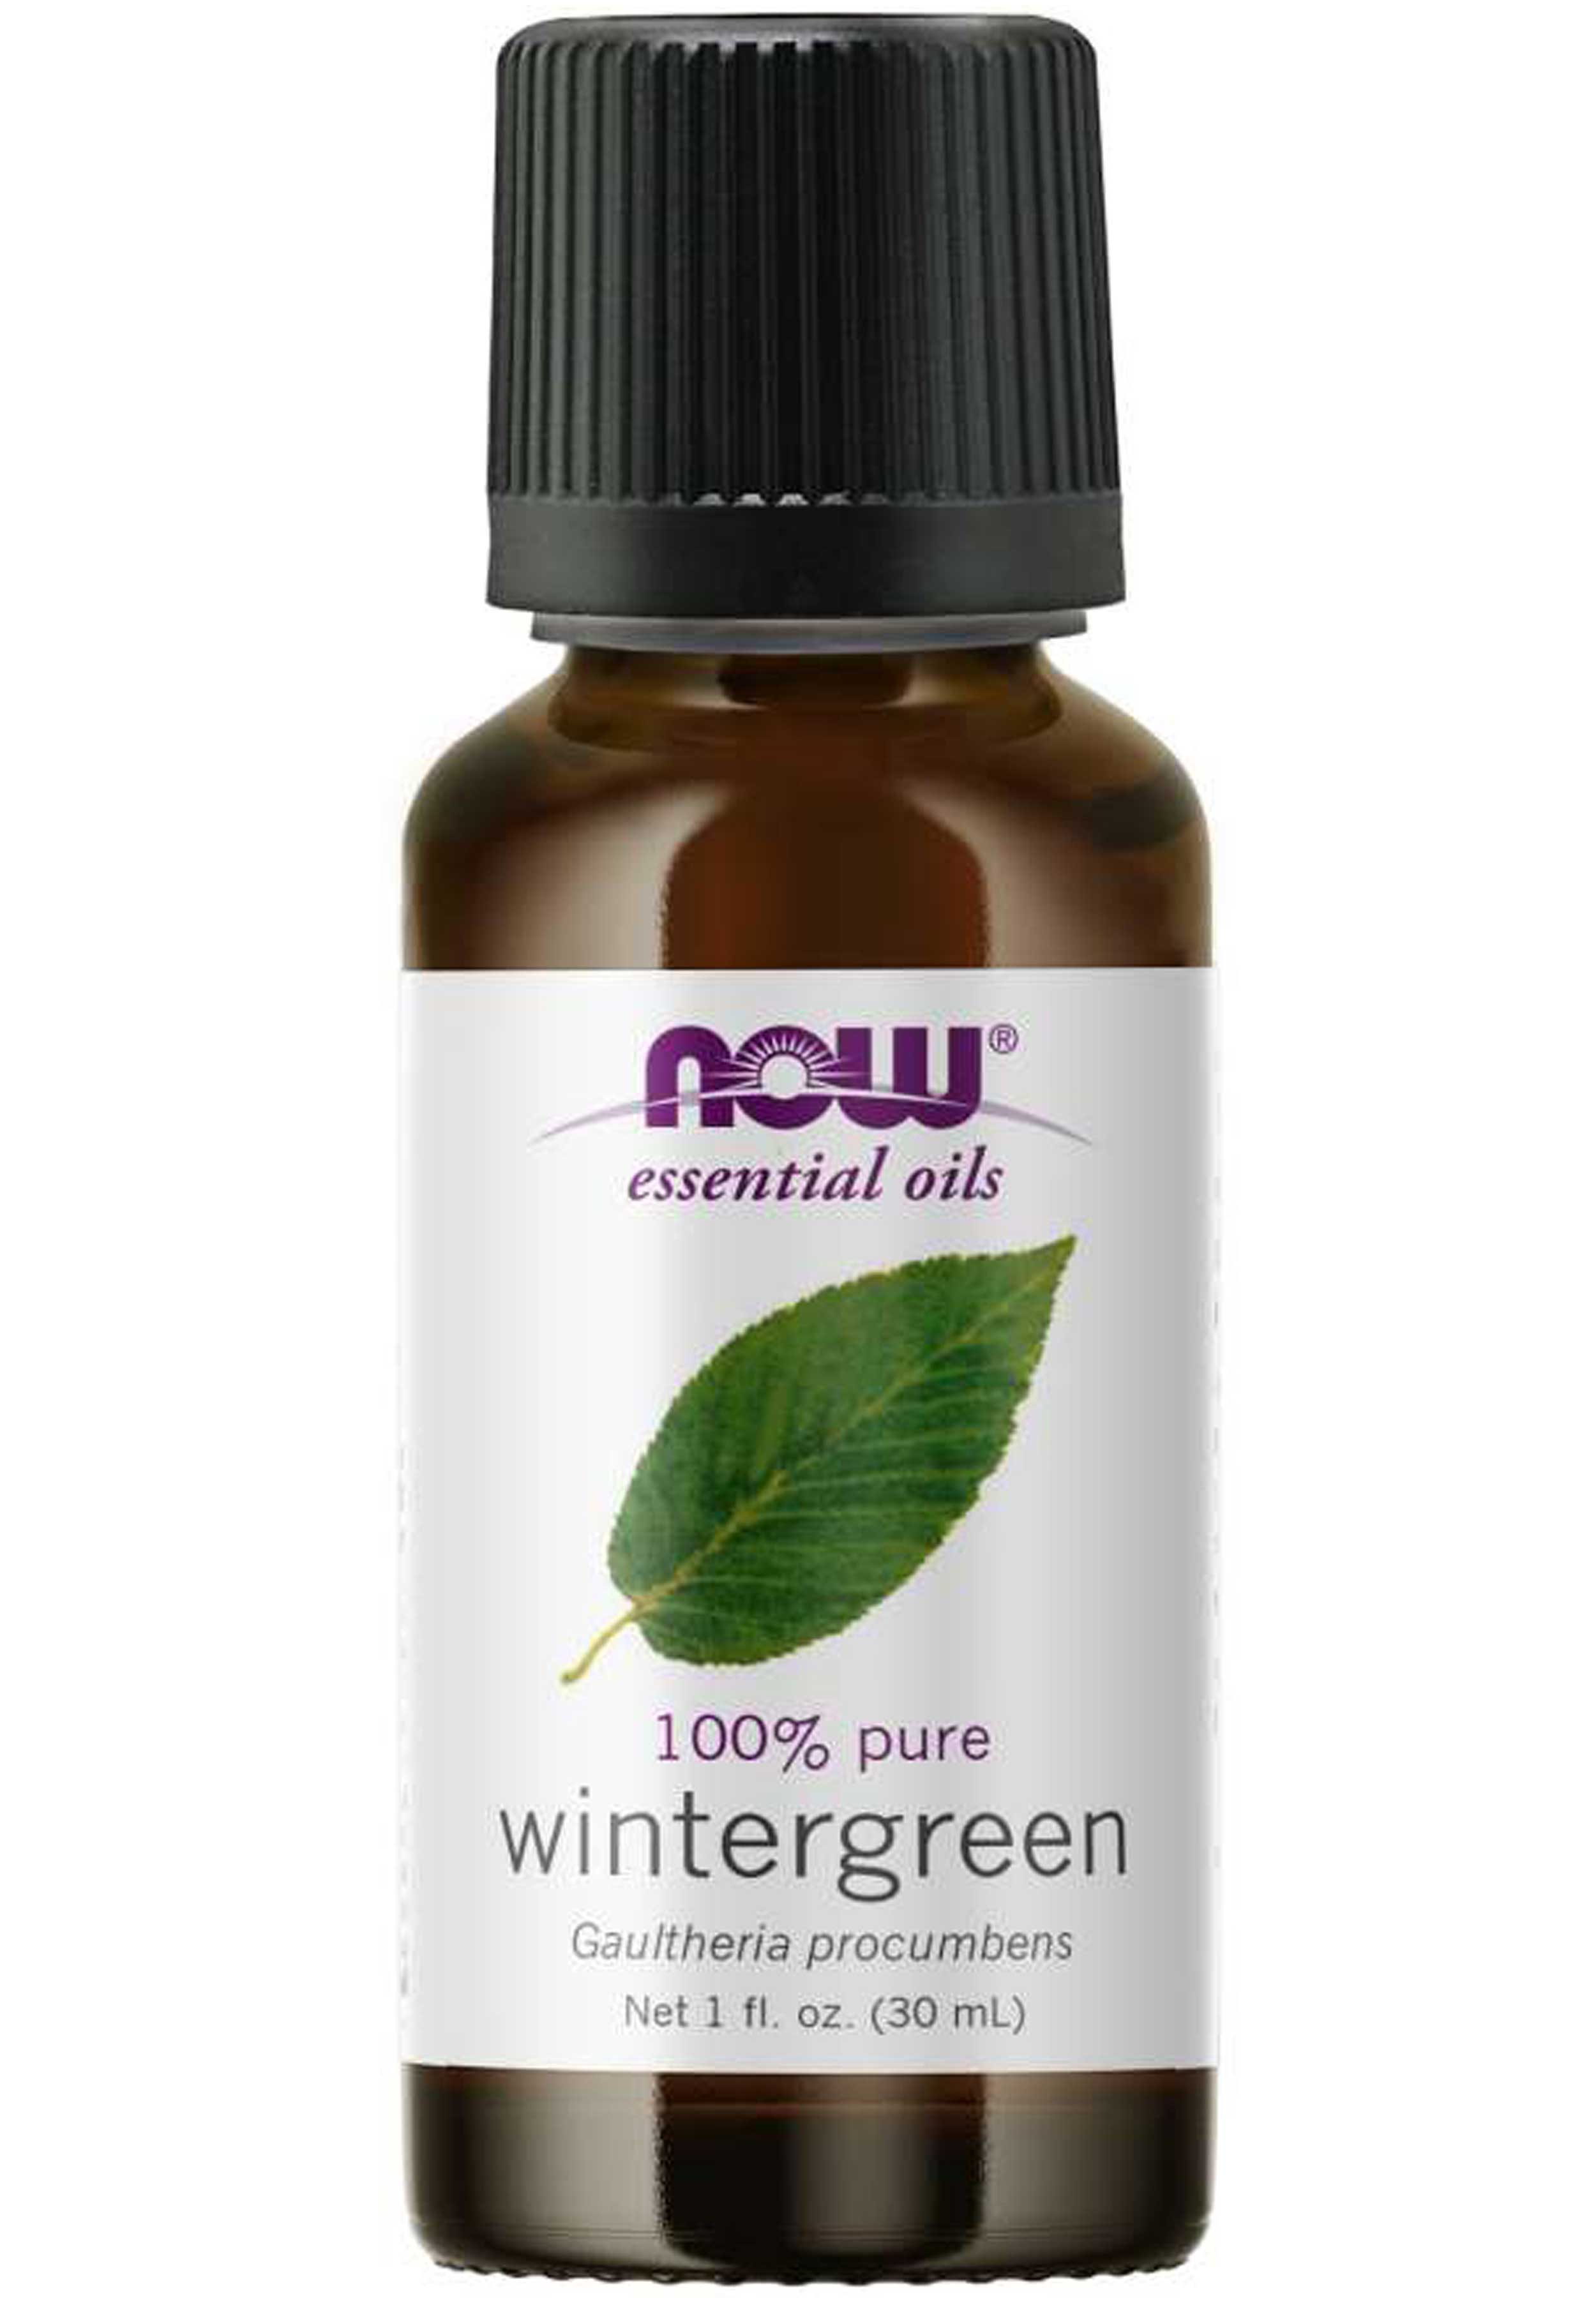 NOW Essential Oils Wintergreen Oil